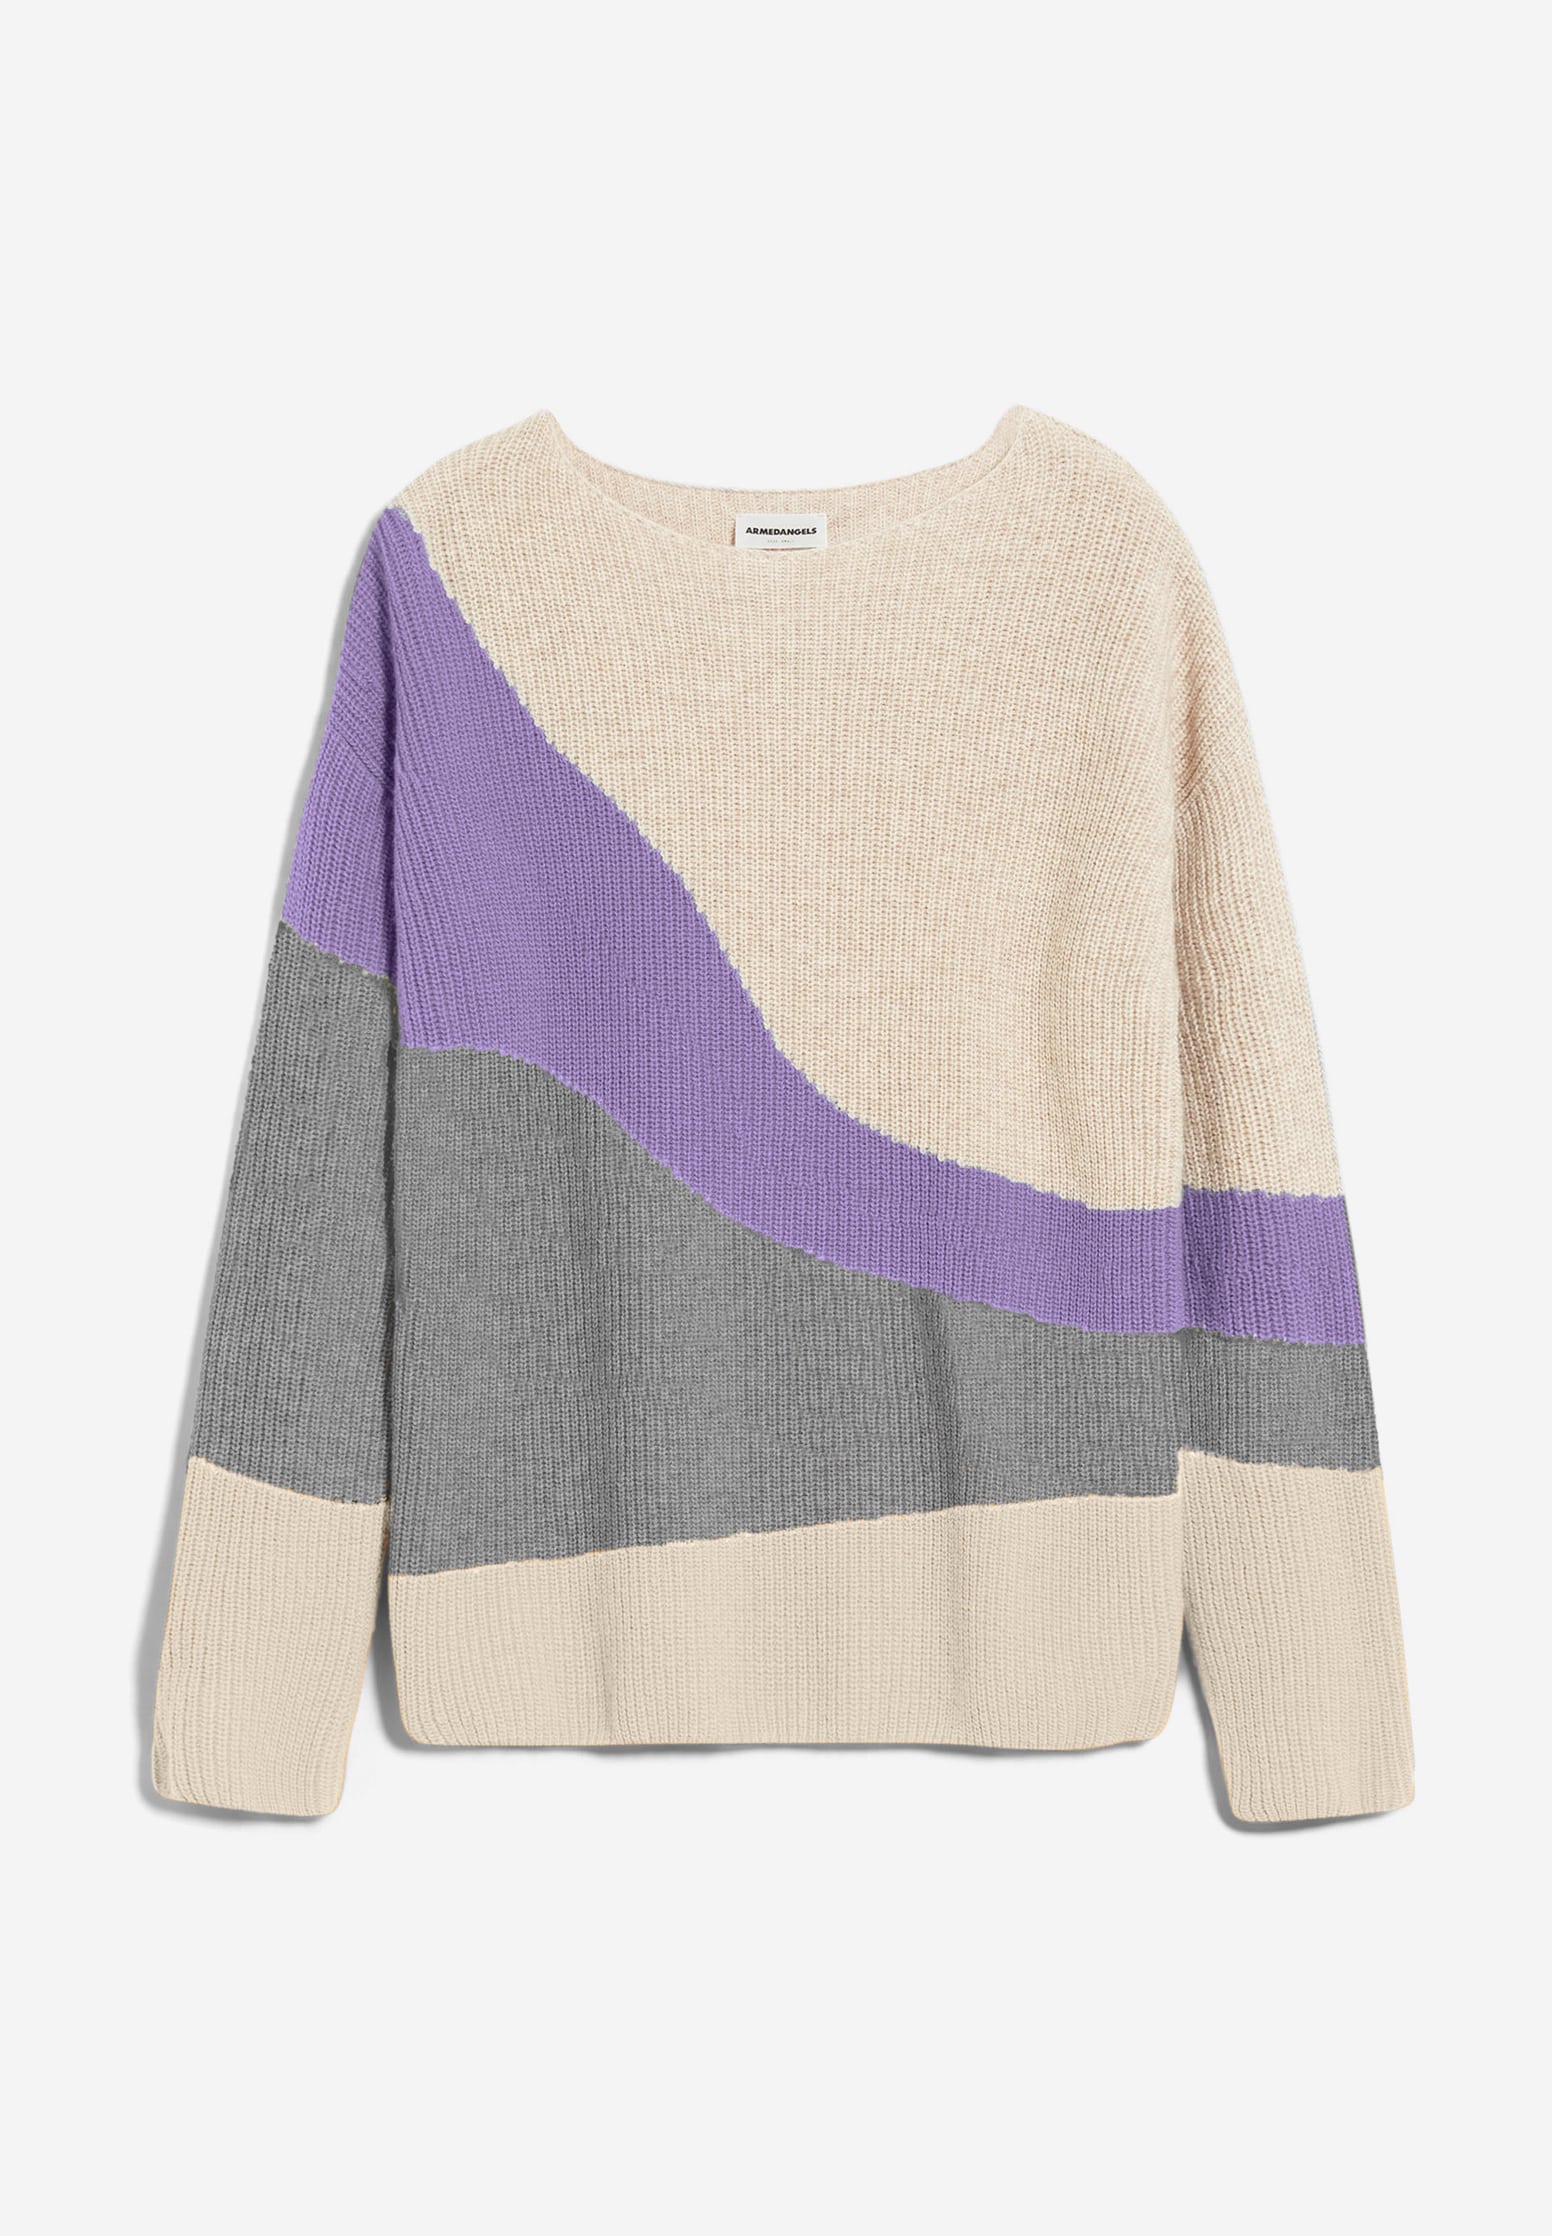 sweater miyaas multicolor oatmilk-purple stone